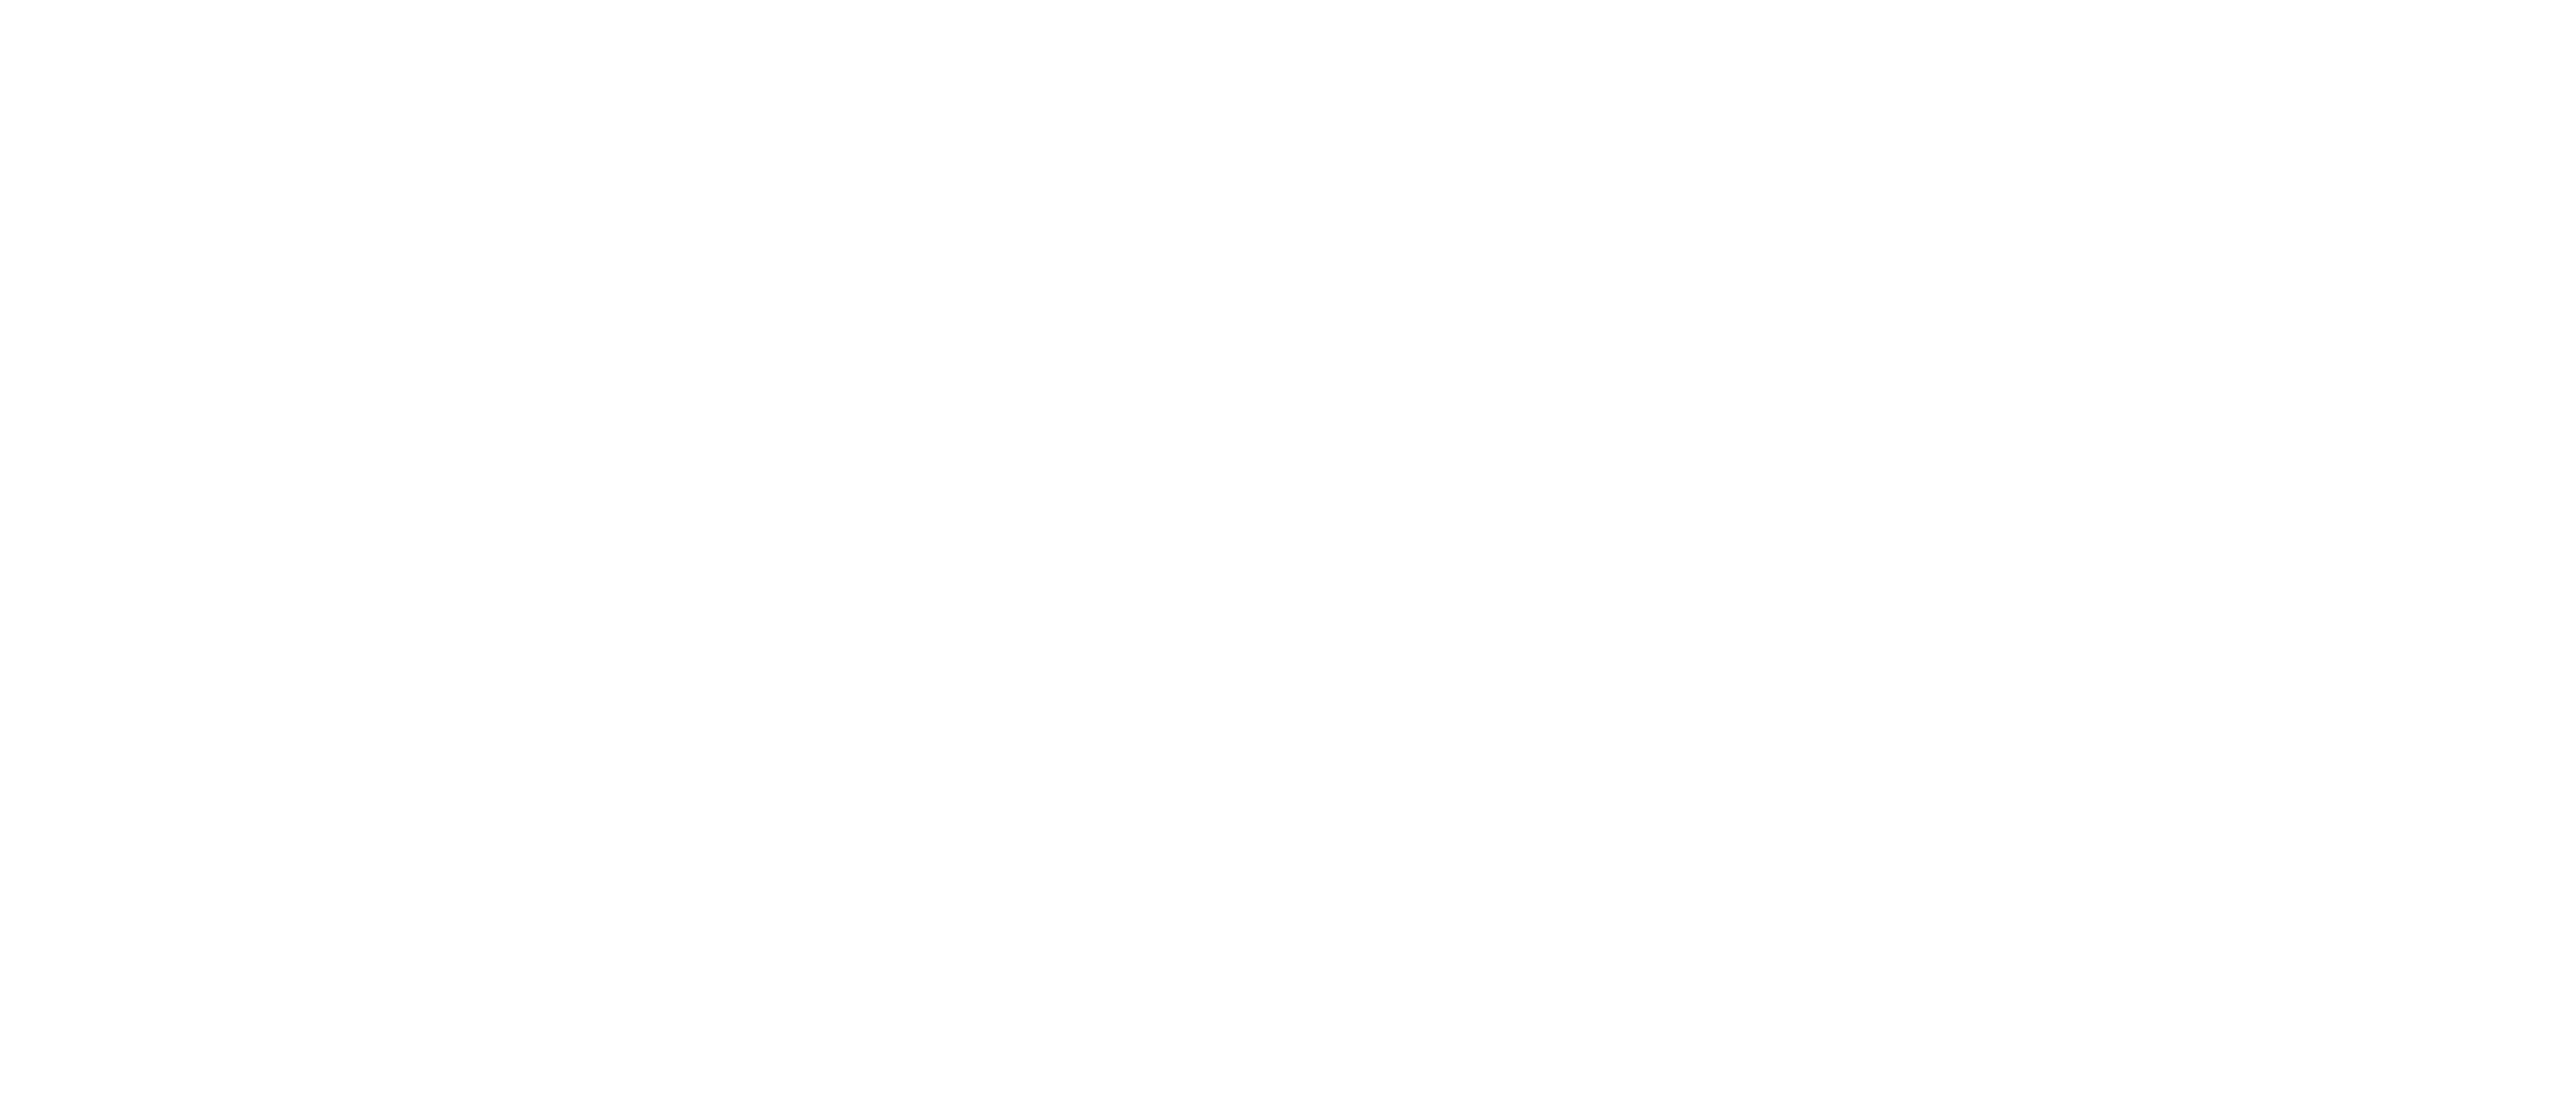 Tavistock Run Project